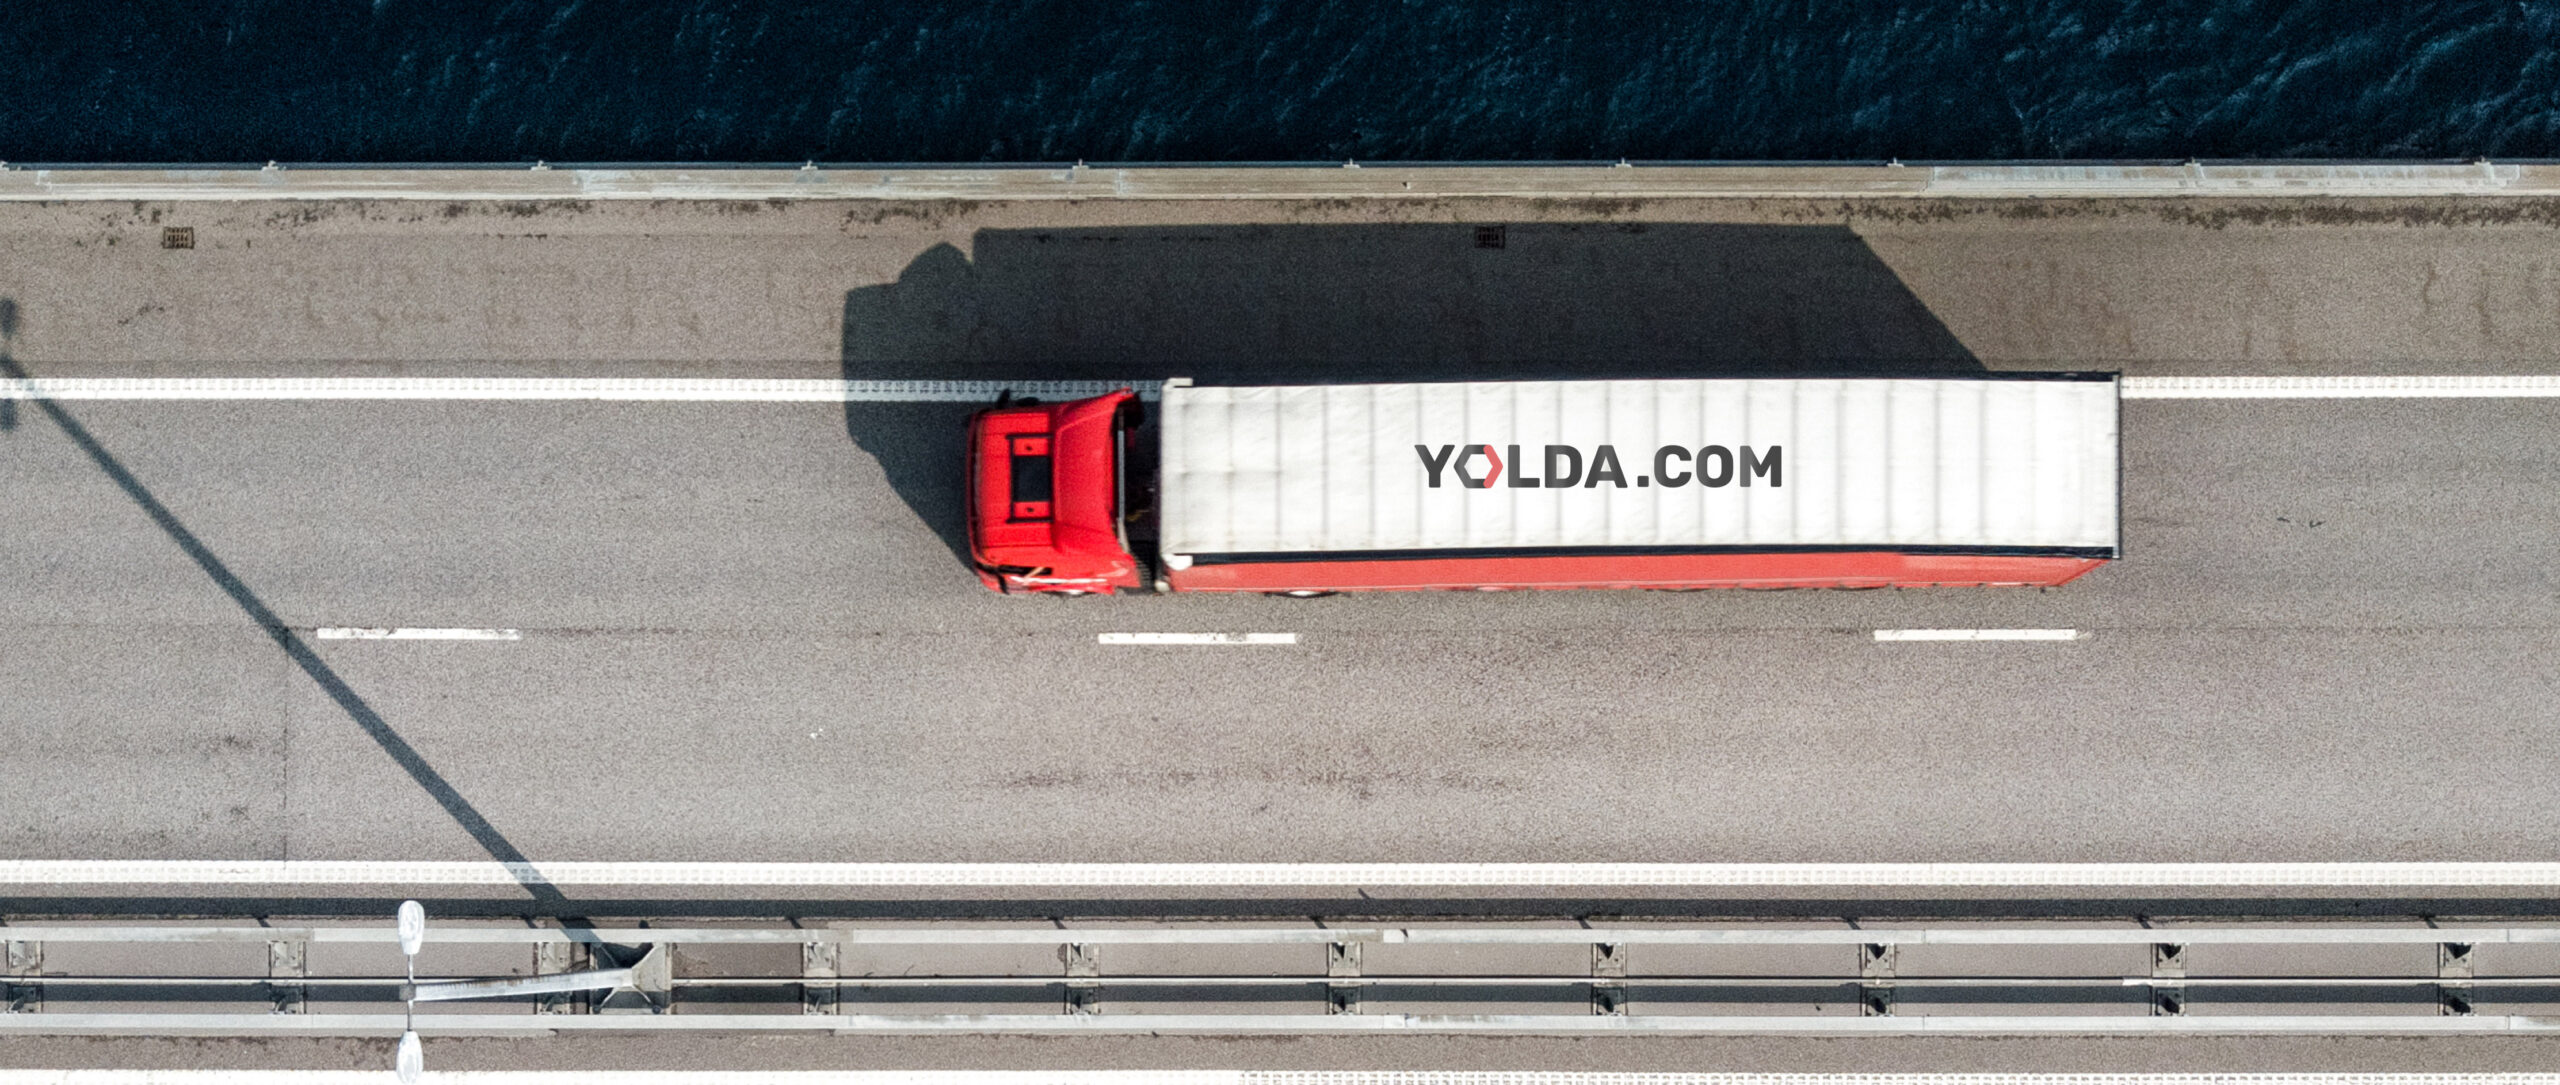 yoldacom-truck-1-scaled